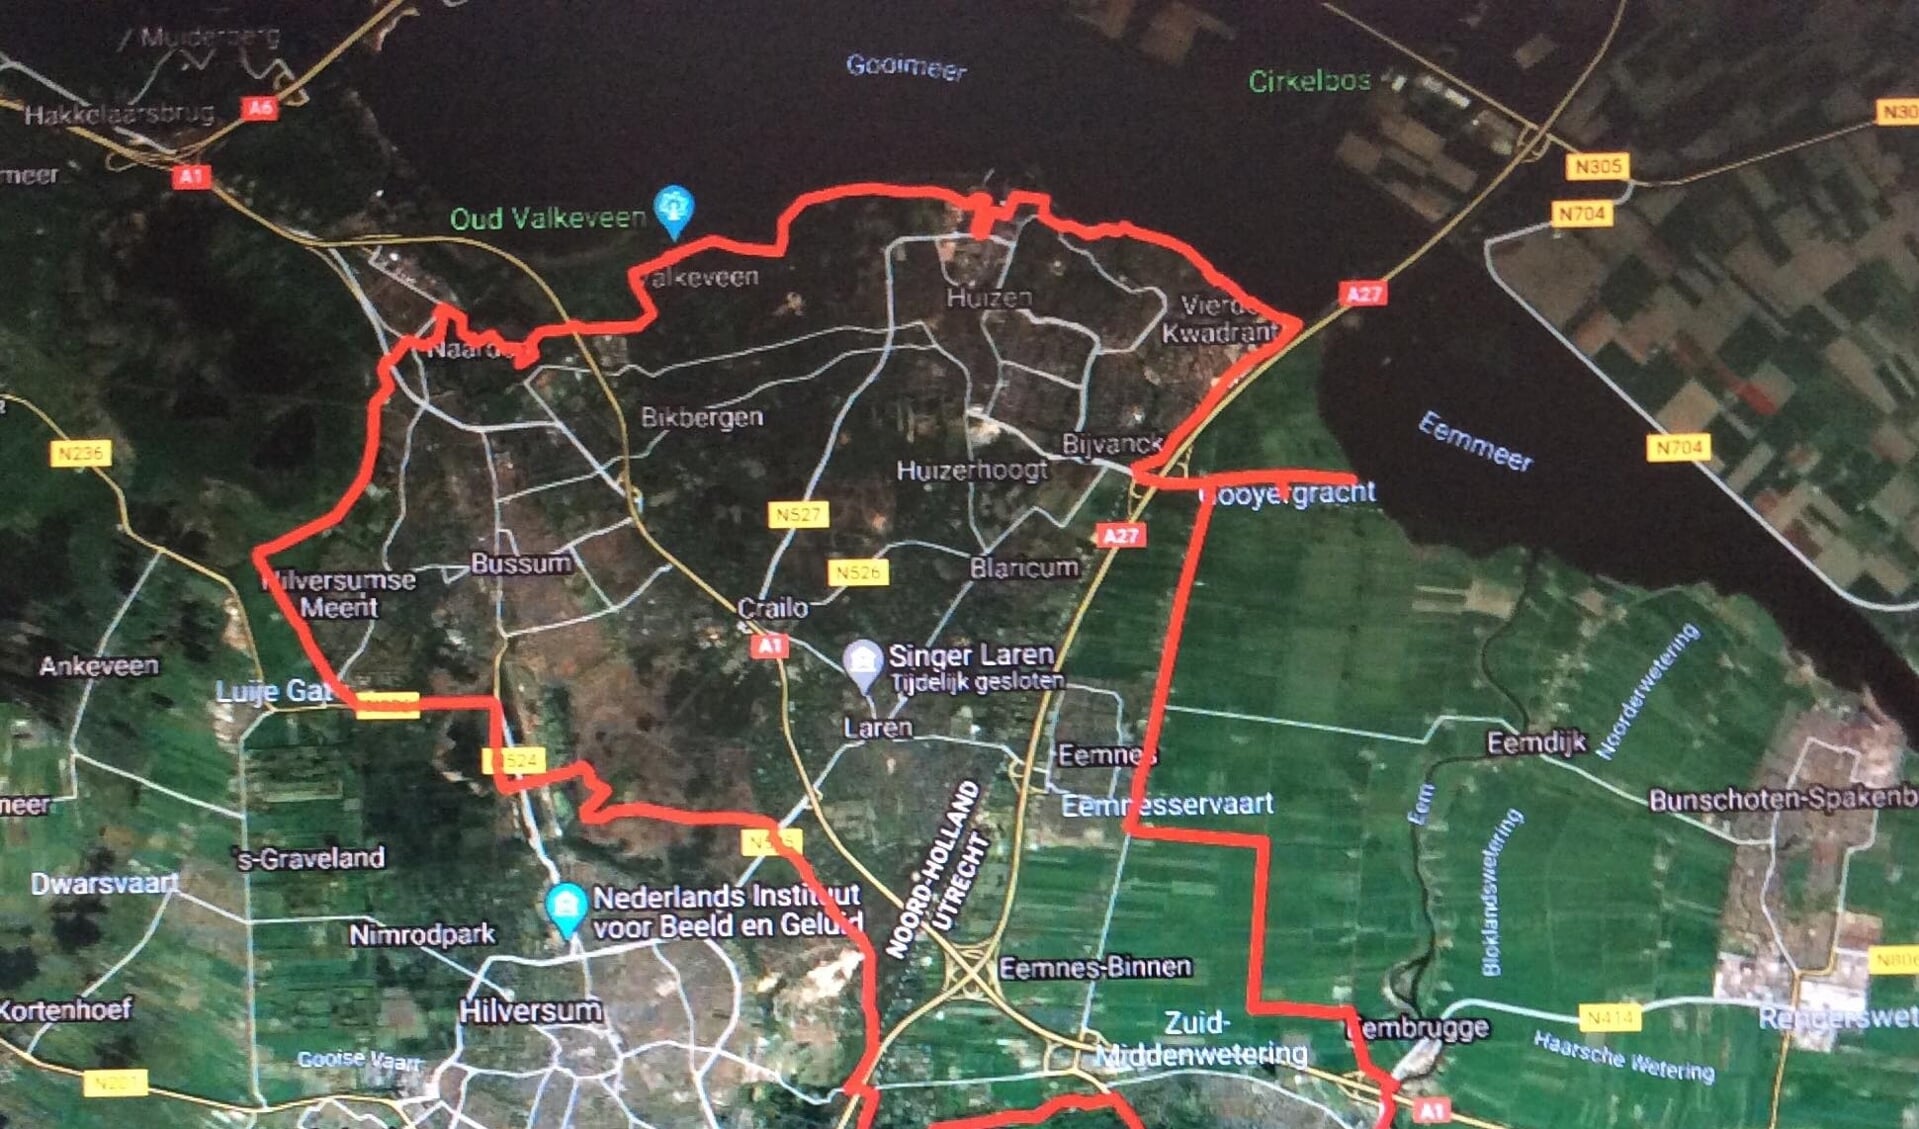 De route via GPS van Garmin